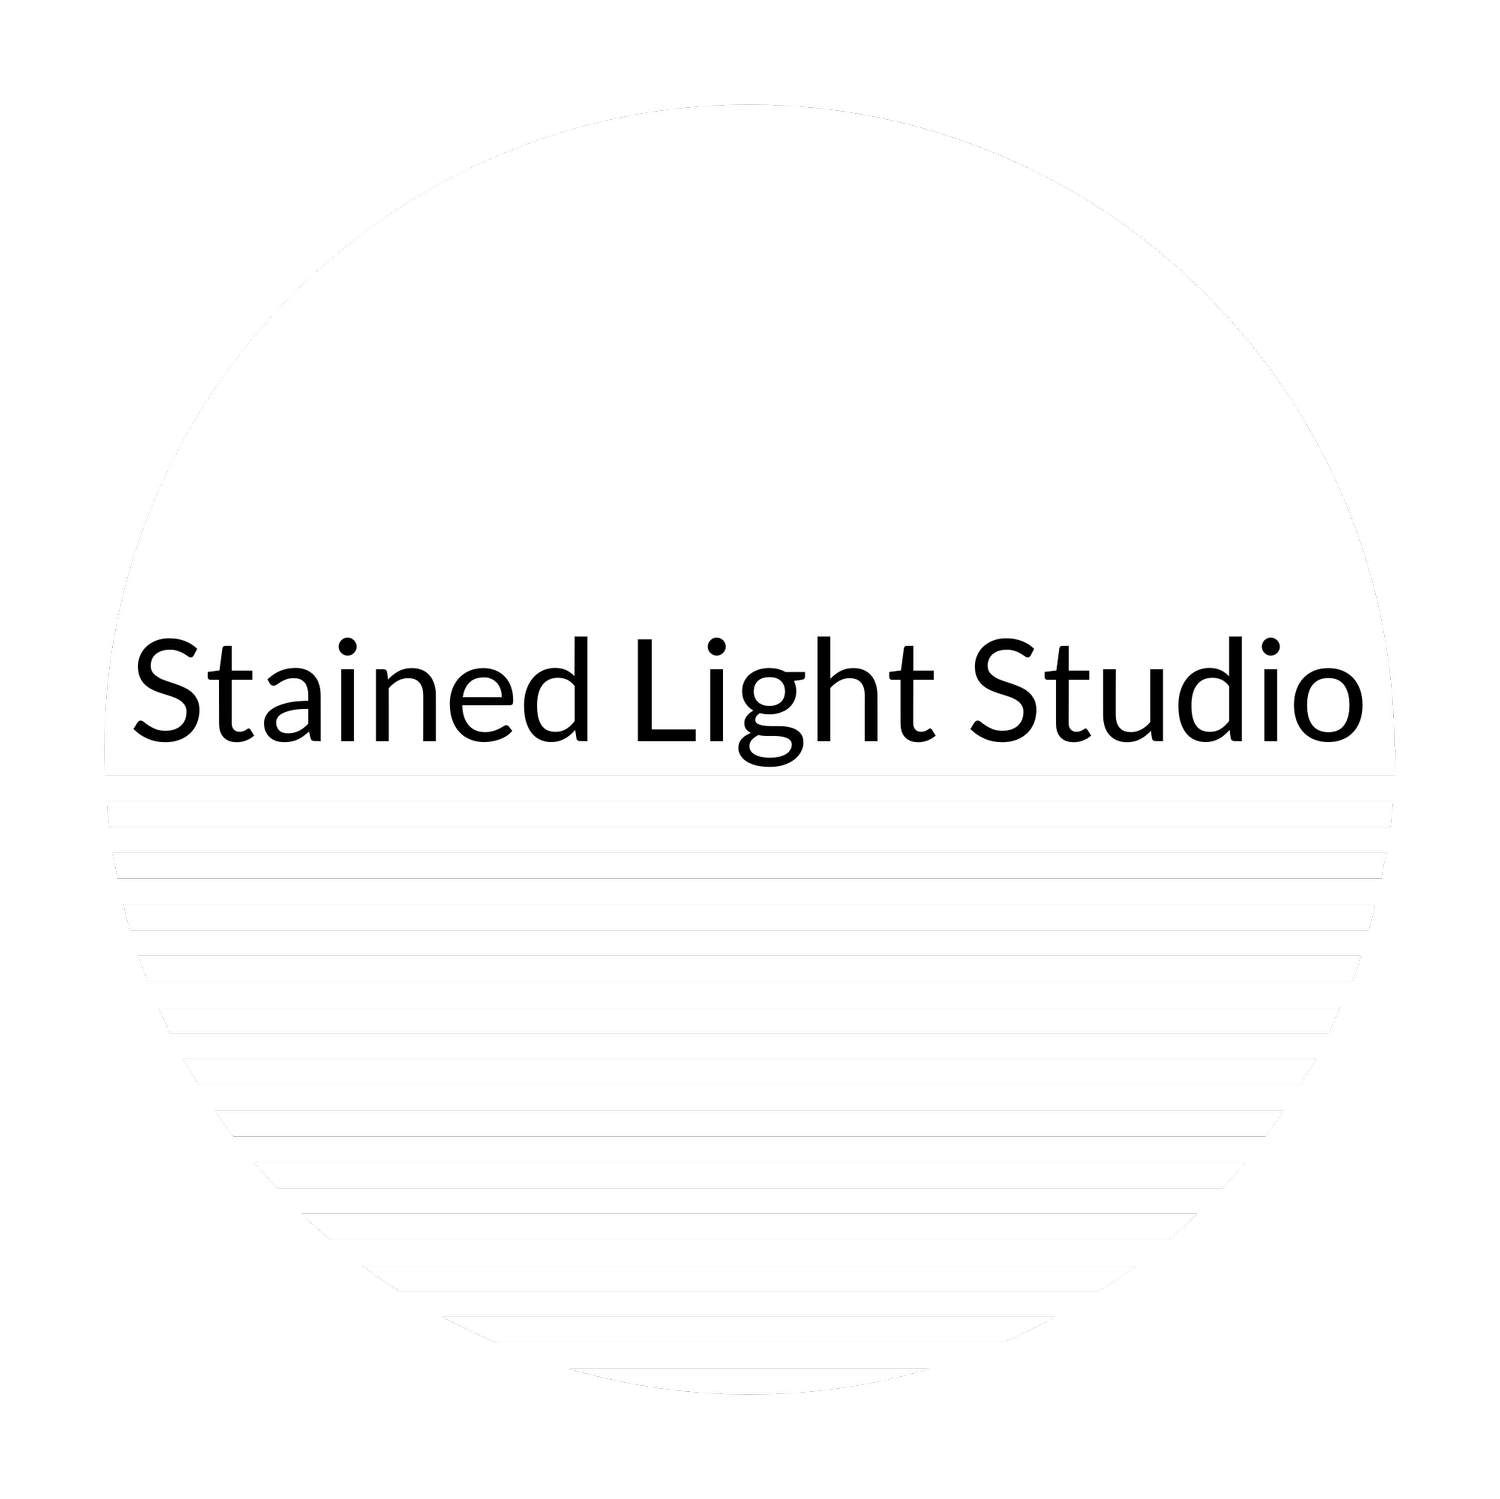 Stained Light Studio